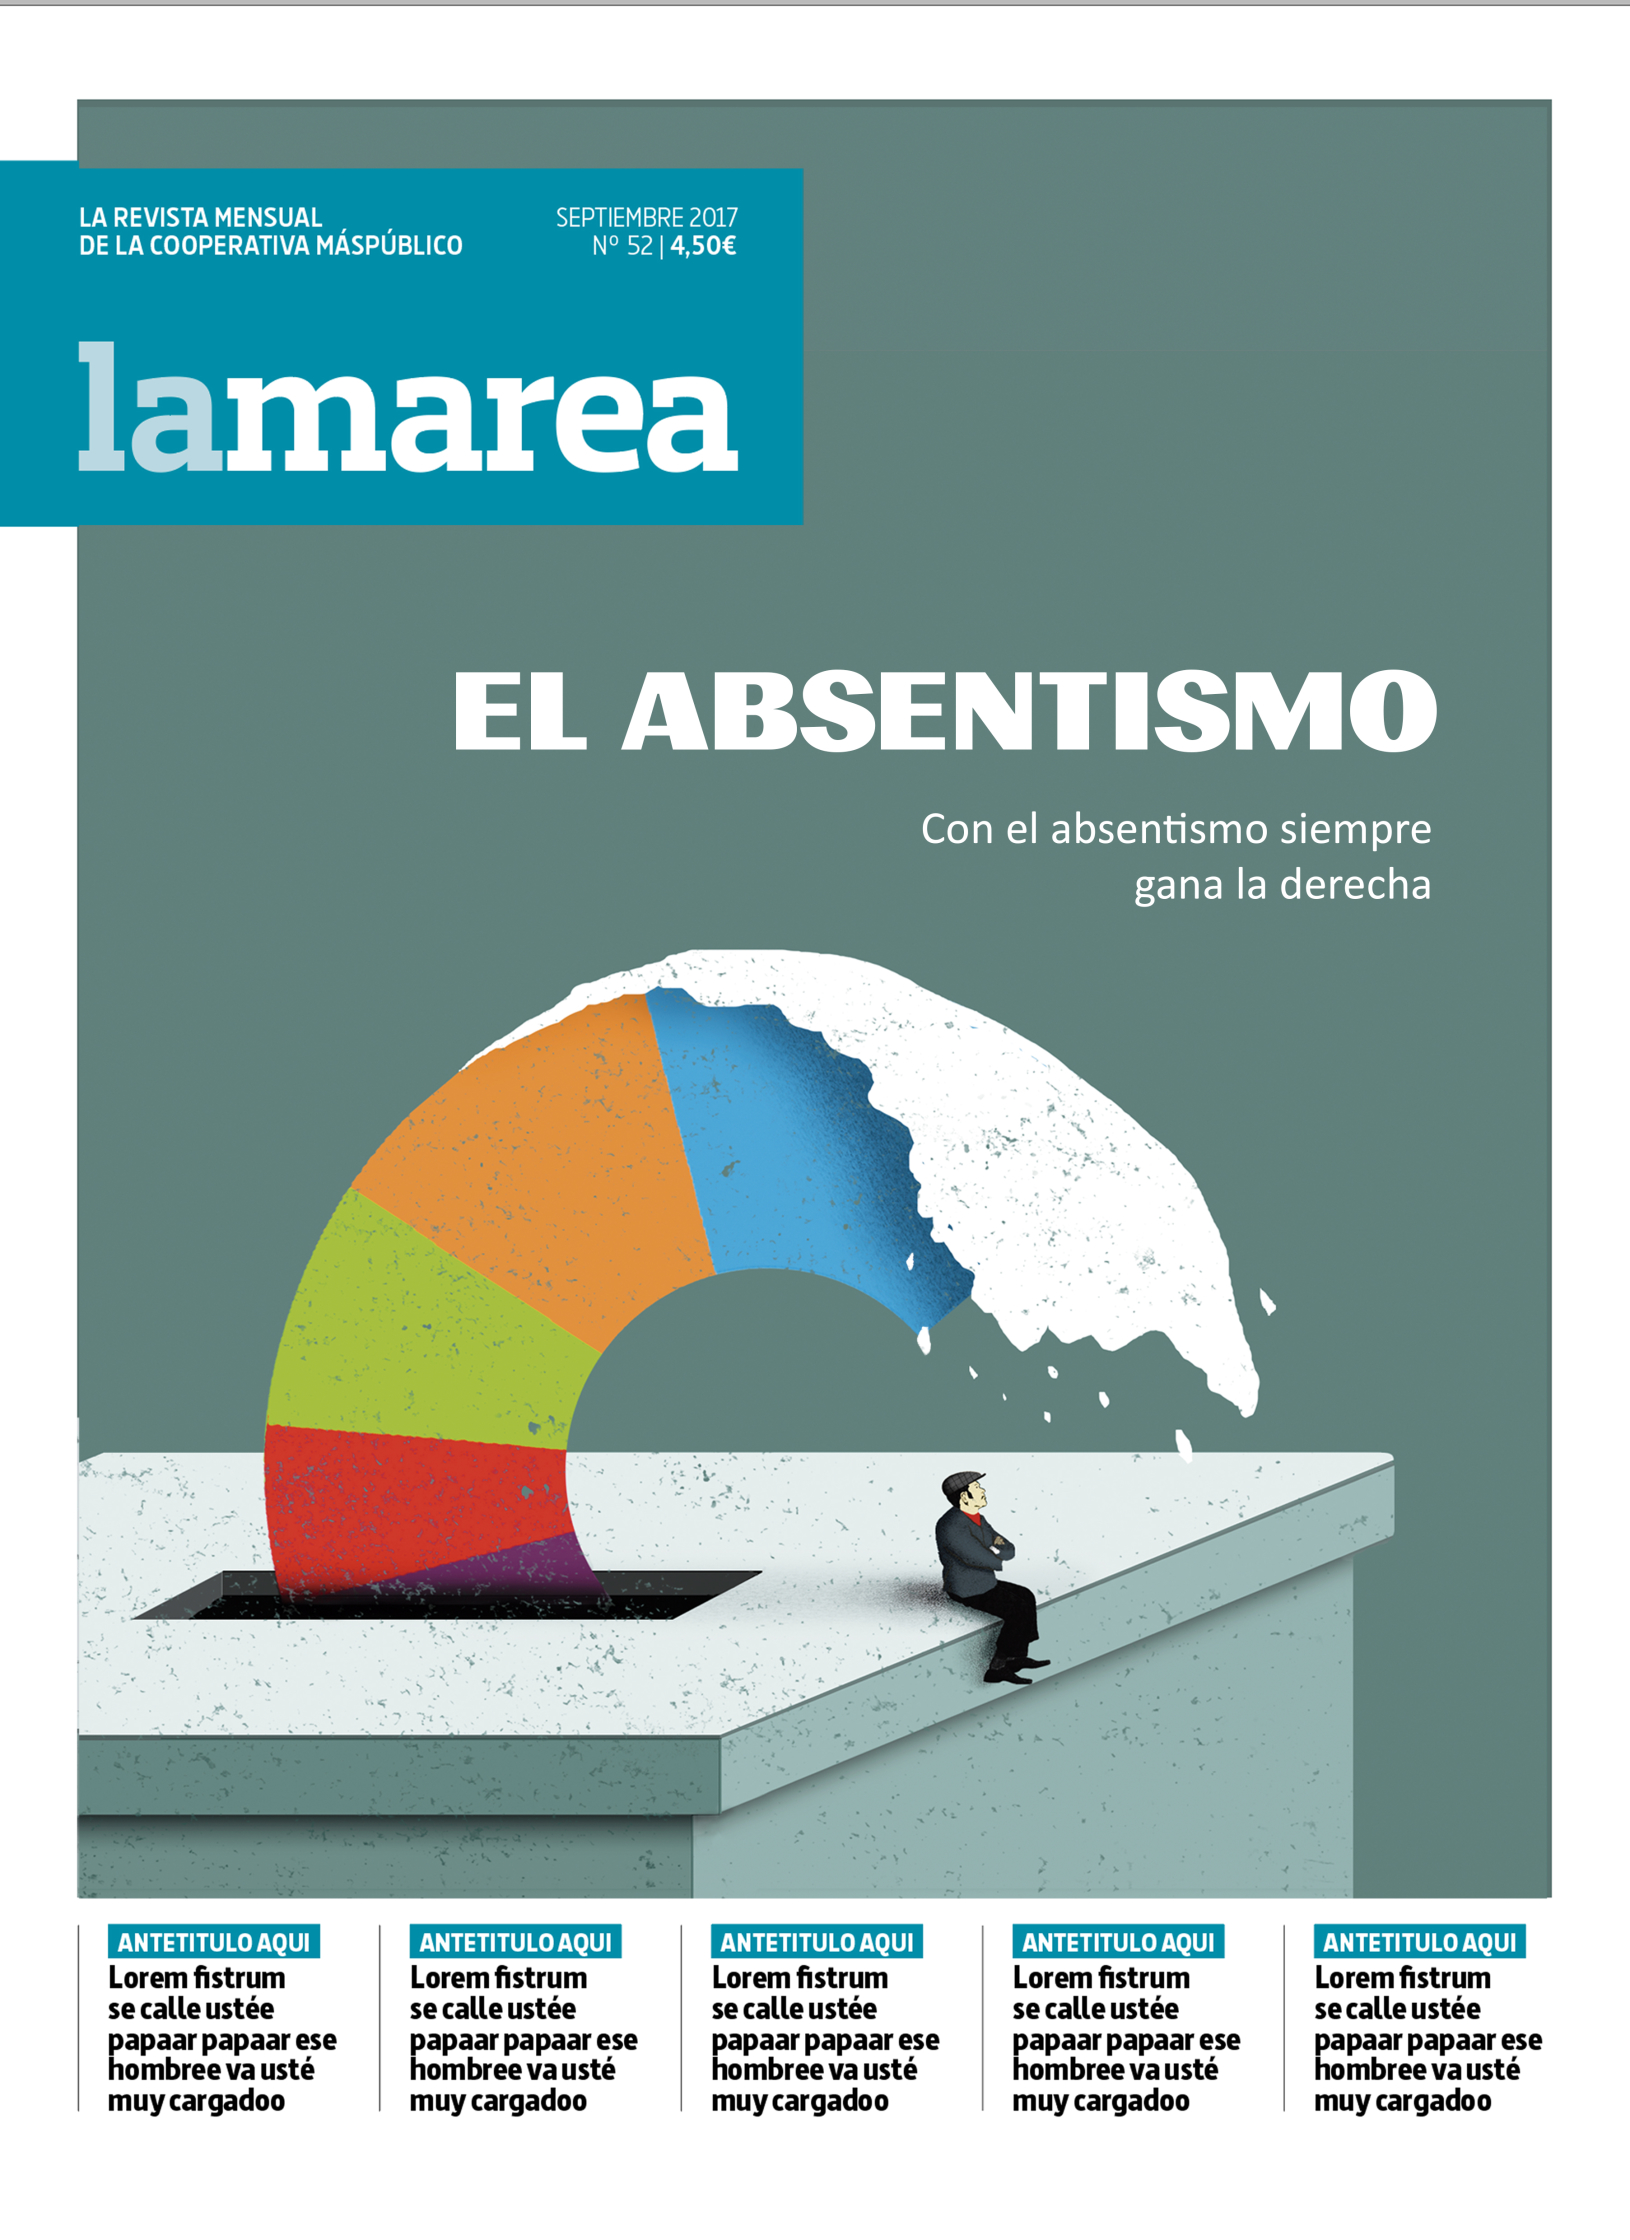 Cover for La Marea (Absenteeism).jpg